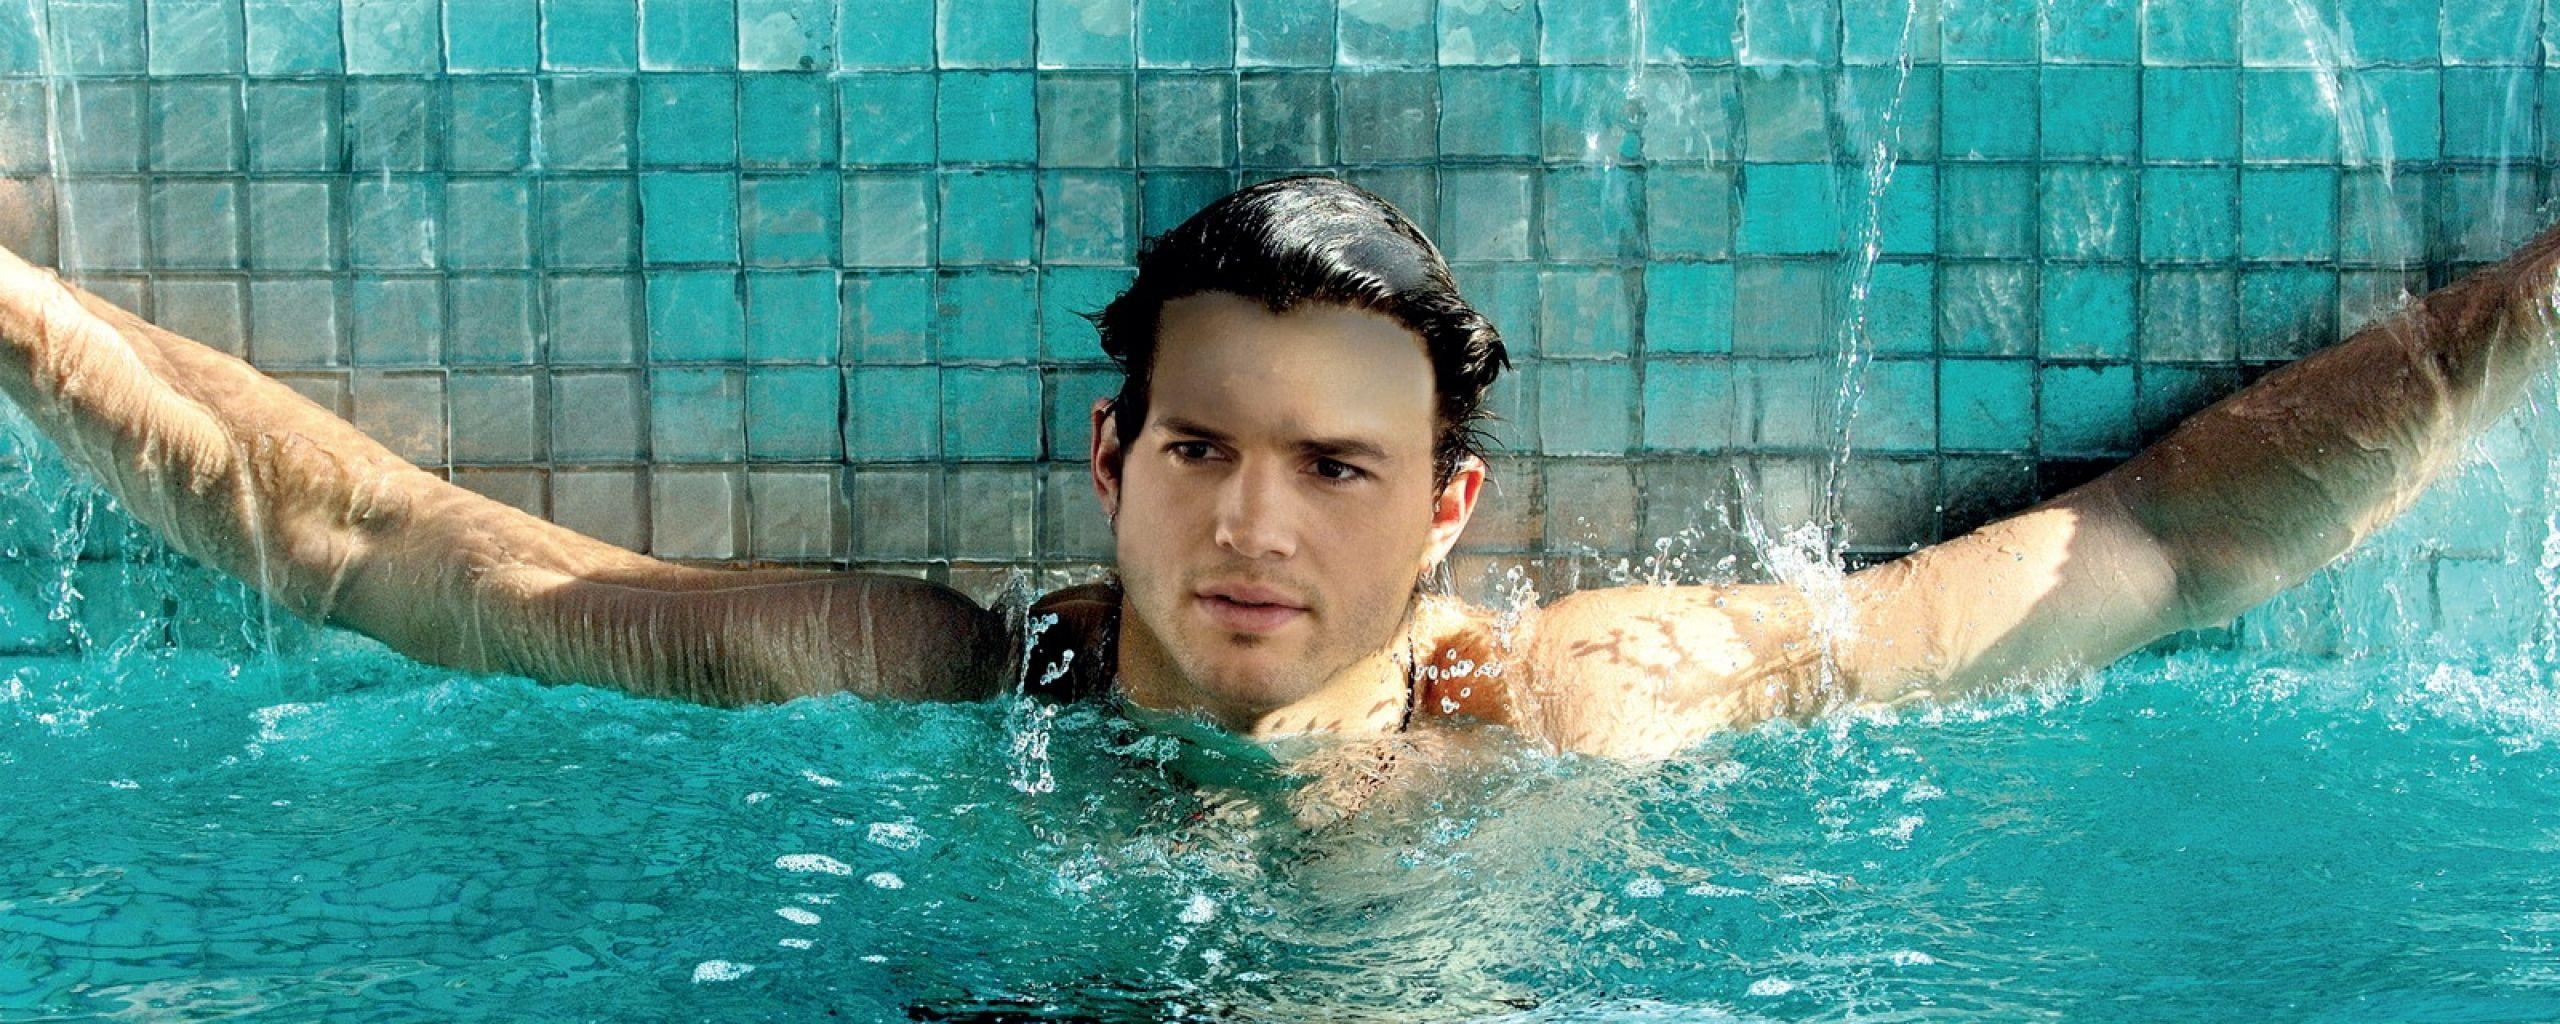 Download Wallpaper 2560x1024 Ashton kutcher, swimming pool, Actor